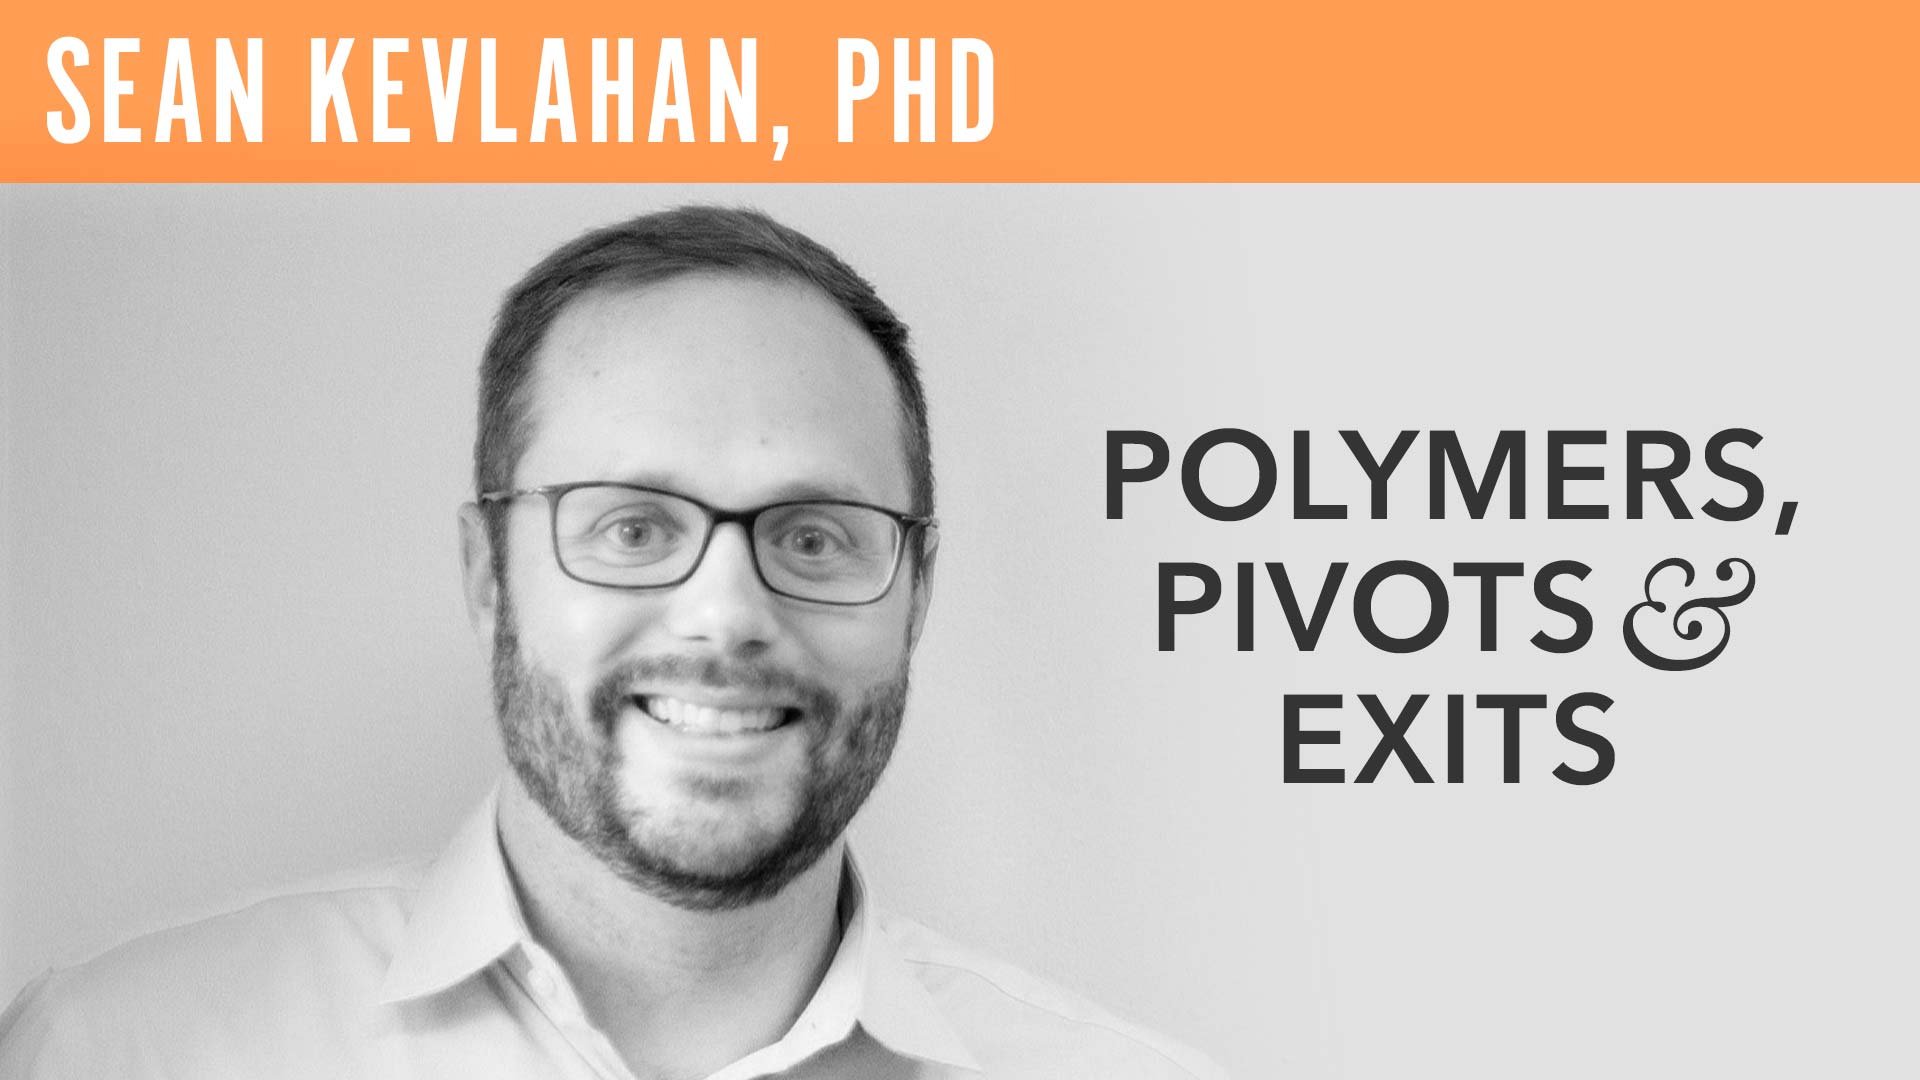 Sean Kevlahan, PhD, "Polymers, Pivots & Exits"